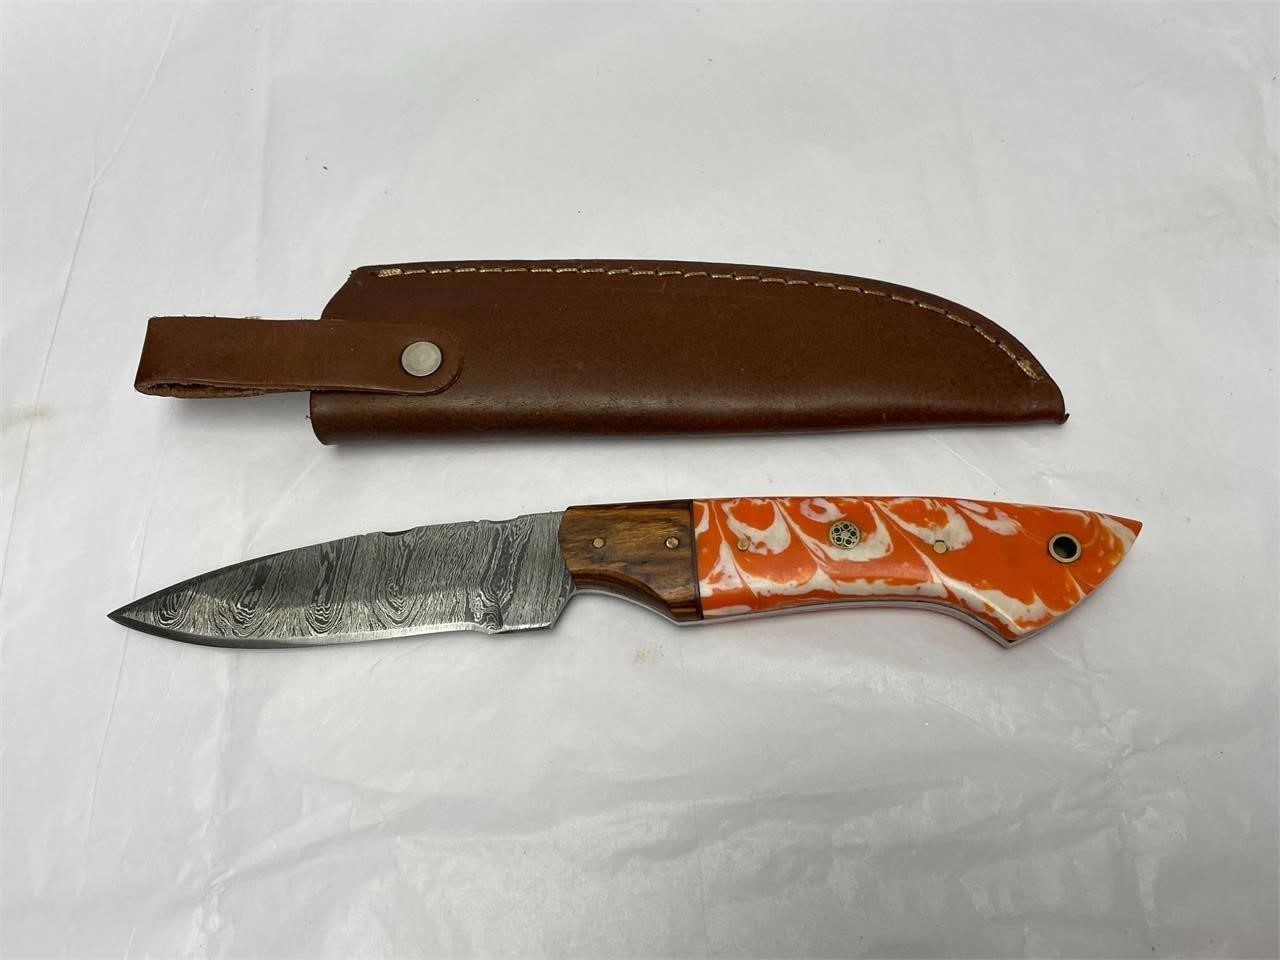 Fixed Blade Hunting Knife with Sheath - Orange